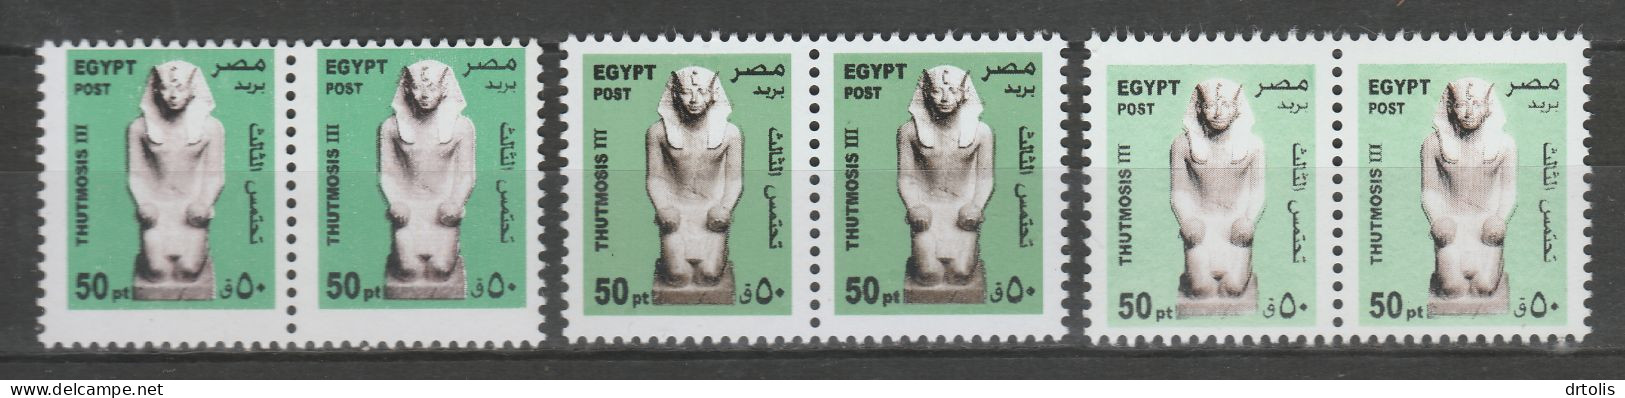 EGYPT / 2013 / A RARE COLOR VARIETY / THUTMOSE III / MNH / VF - Ongebruikt